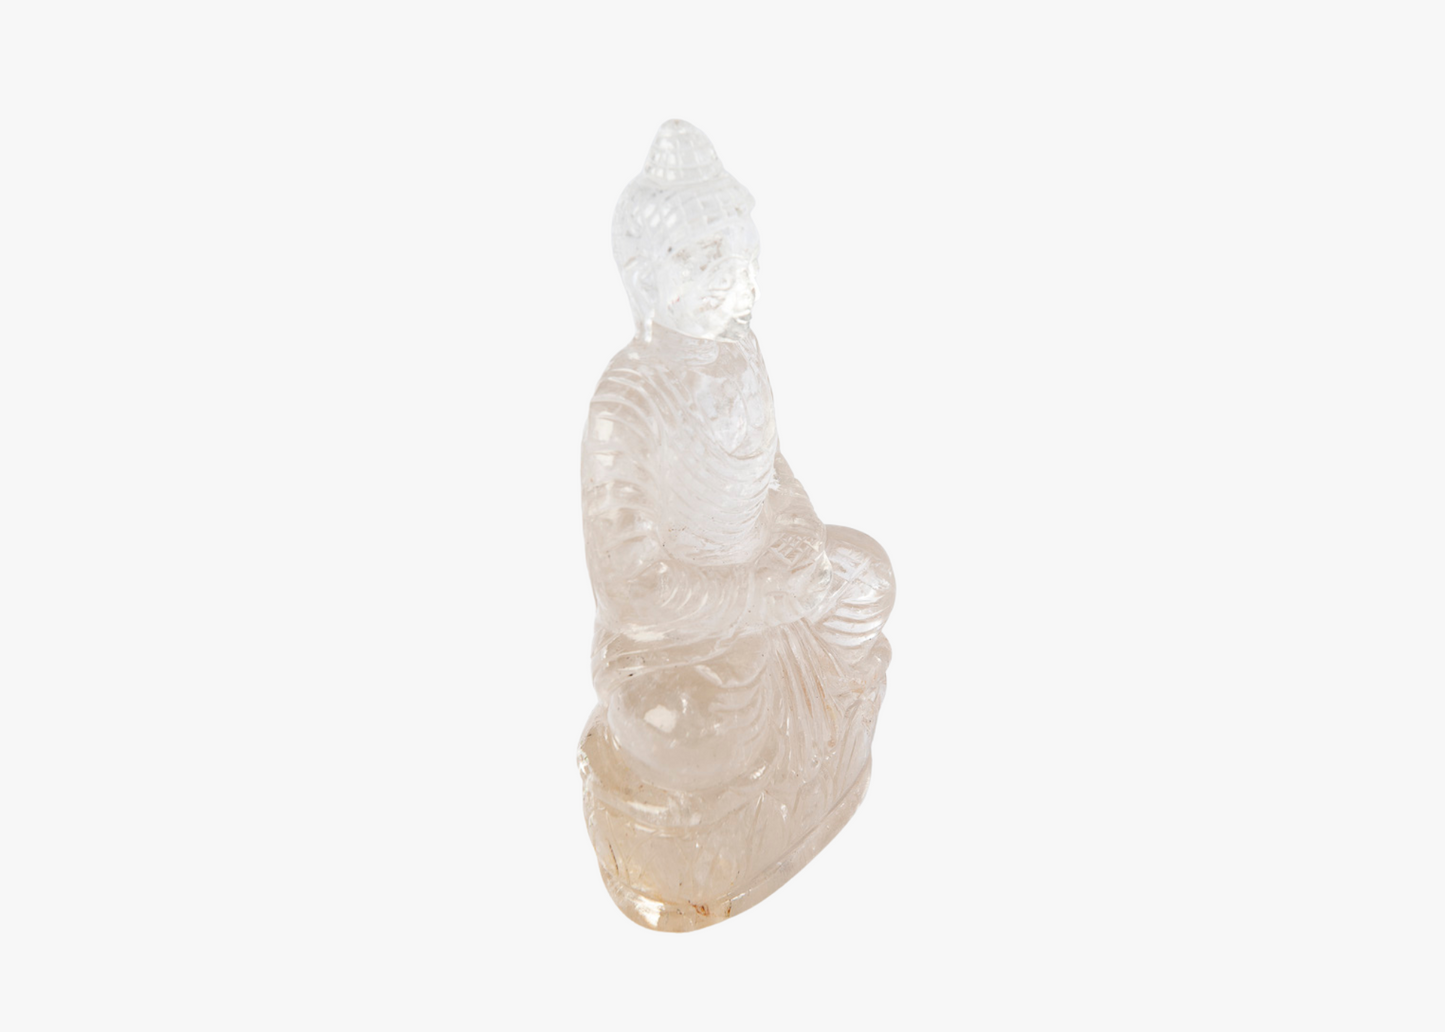 Sitting Buddha - Clear Quartz (Small, 17cm)